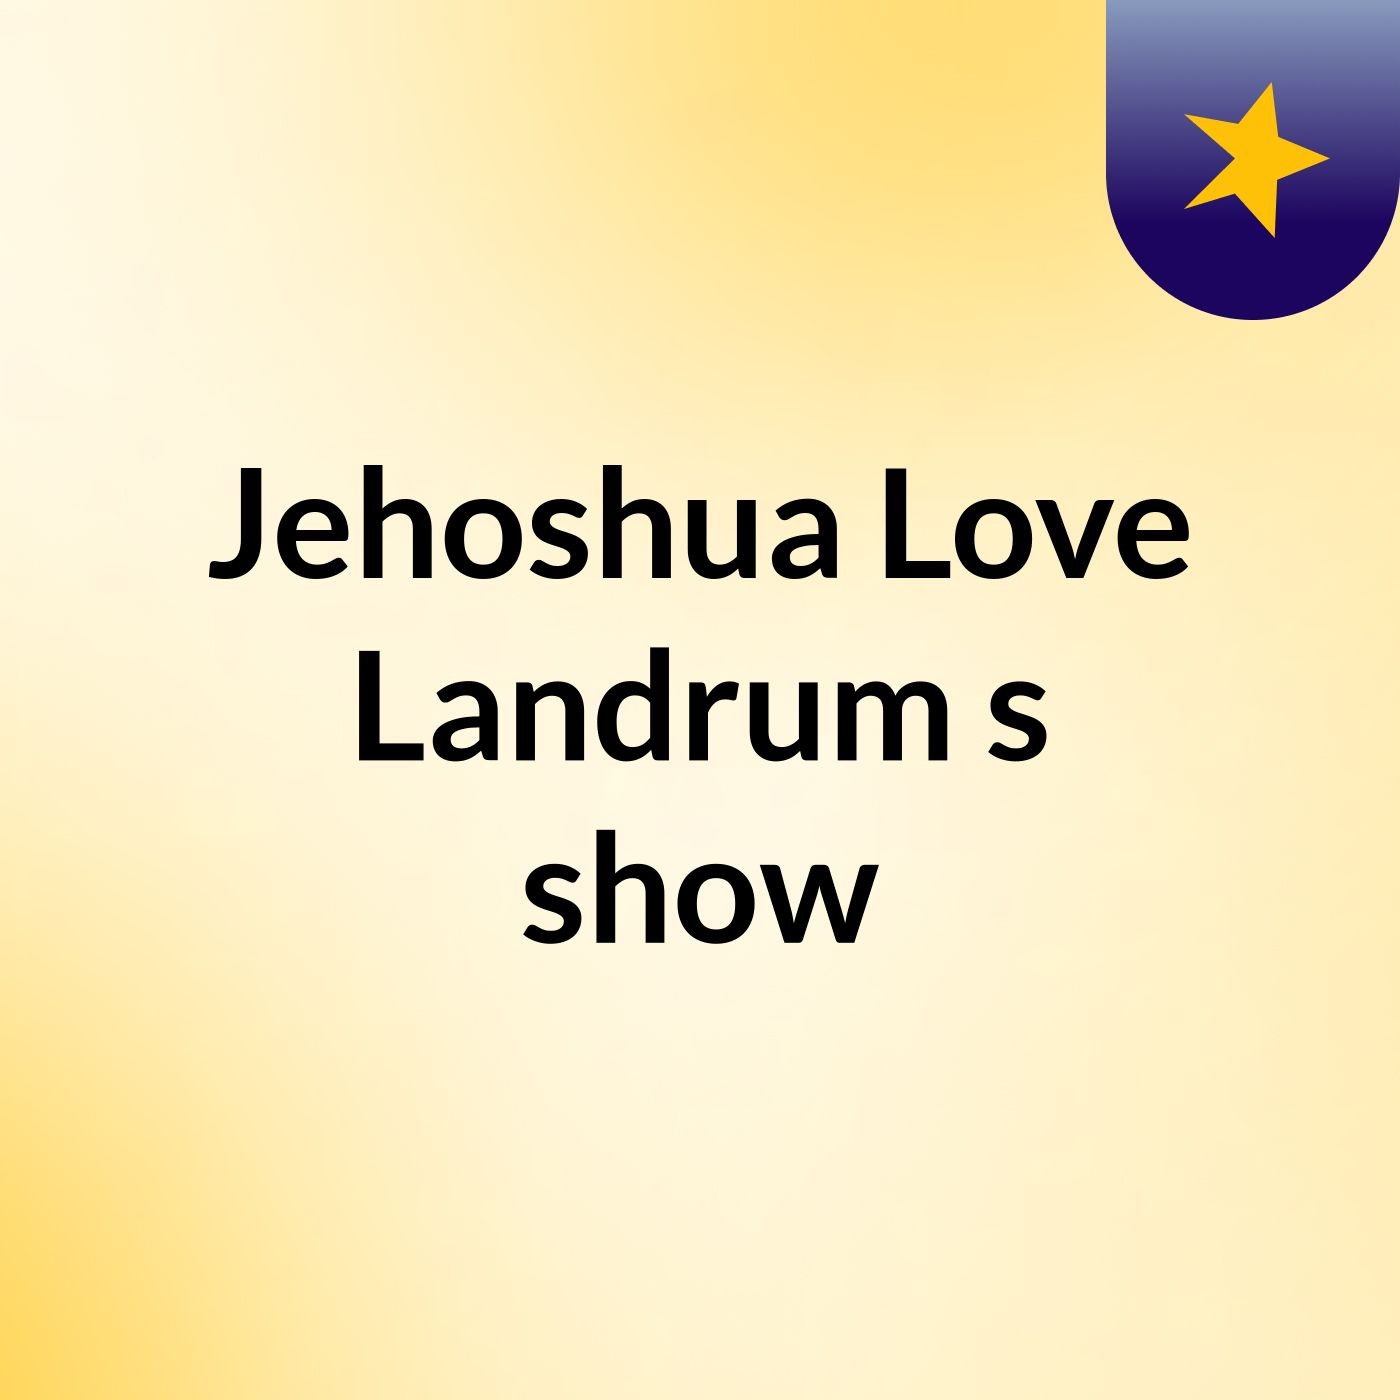 Jehoshua Love Landrum's show